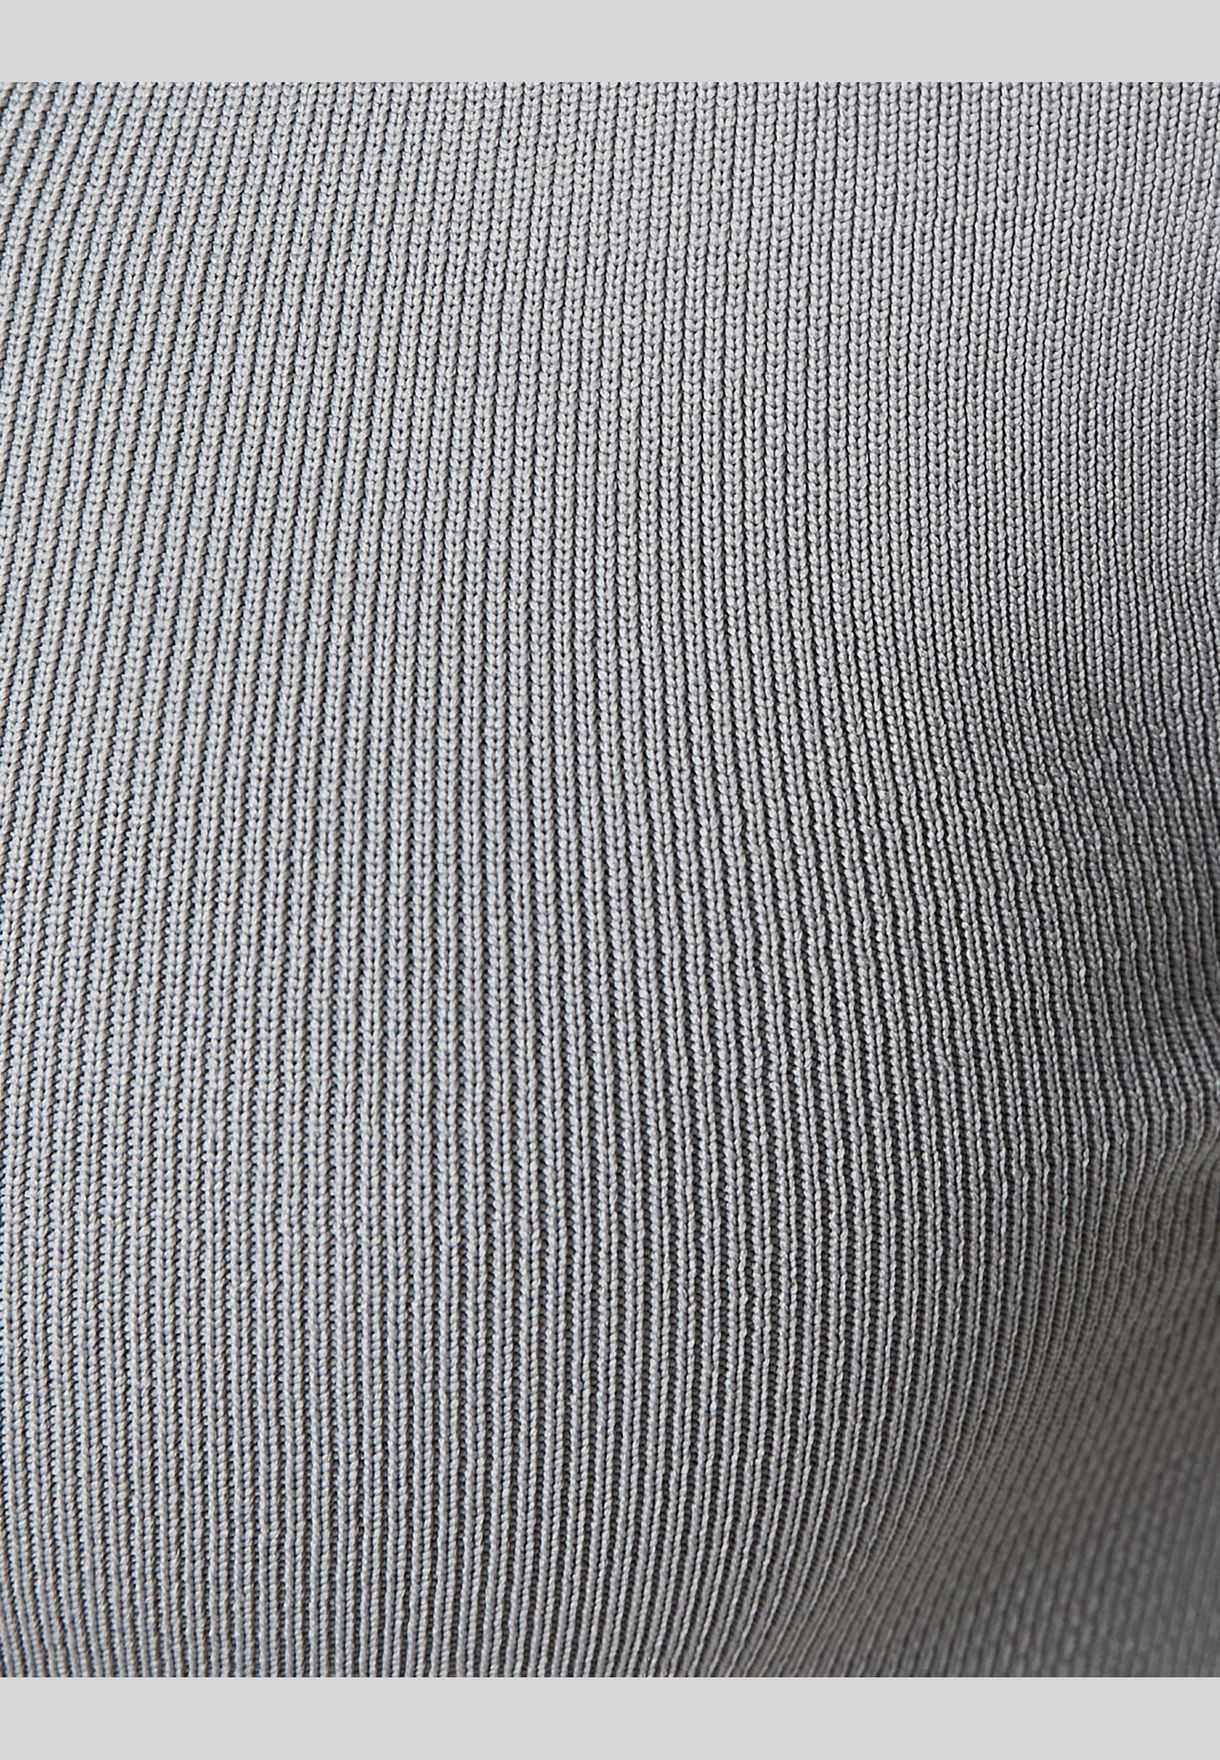 Knitwear Cut Out Detail Crew Neck Glitz Stone Detail Sweater